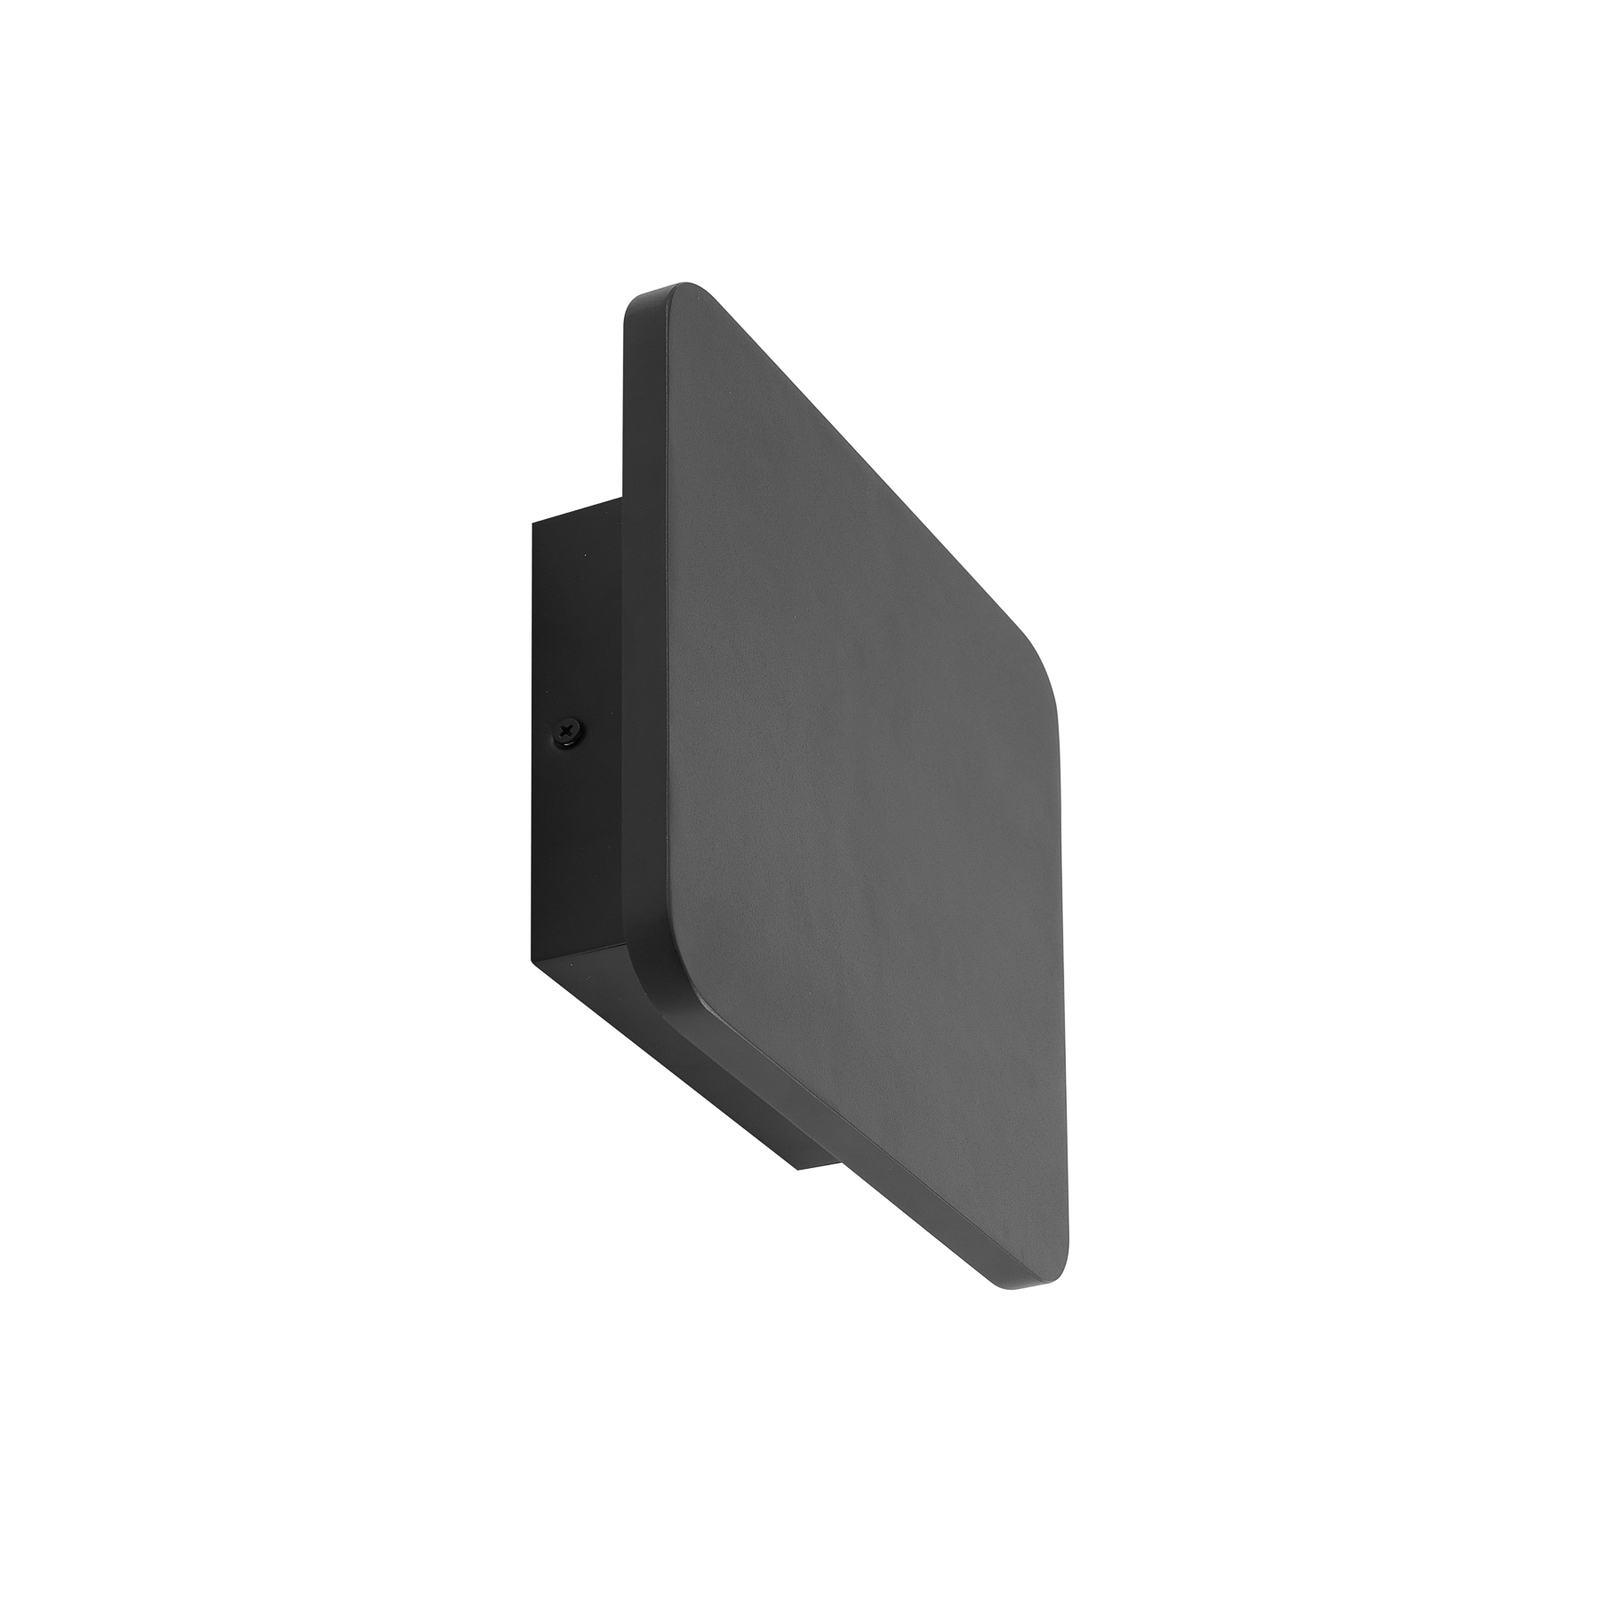 Lucande LED wall light Elrik, black, 22 cm high, metal